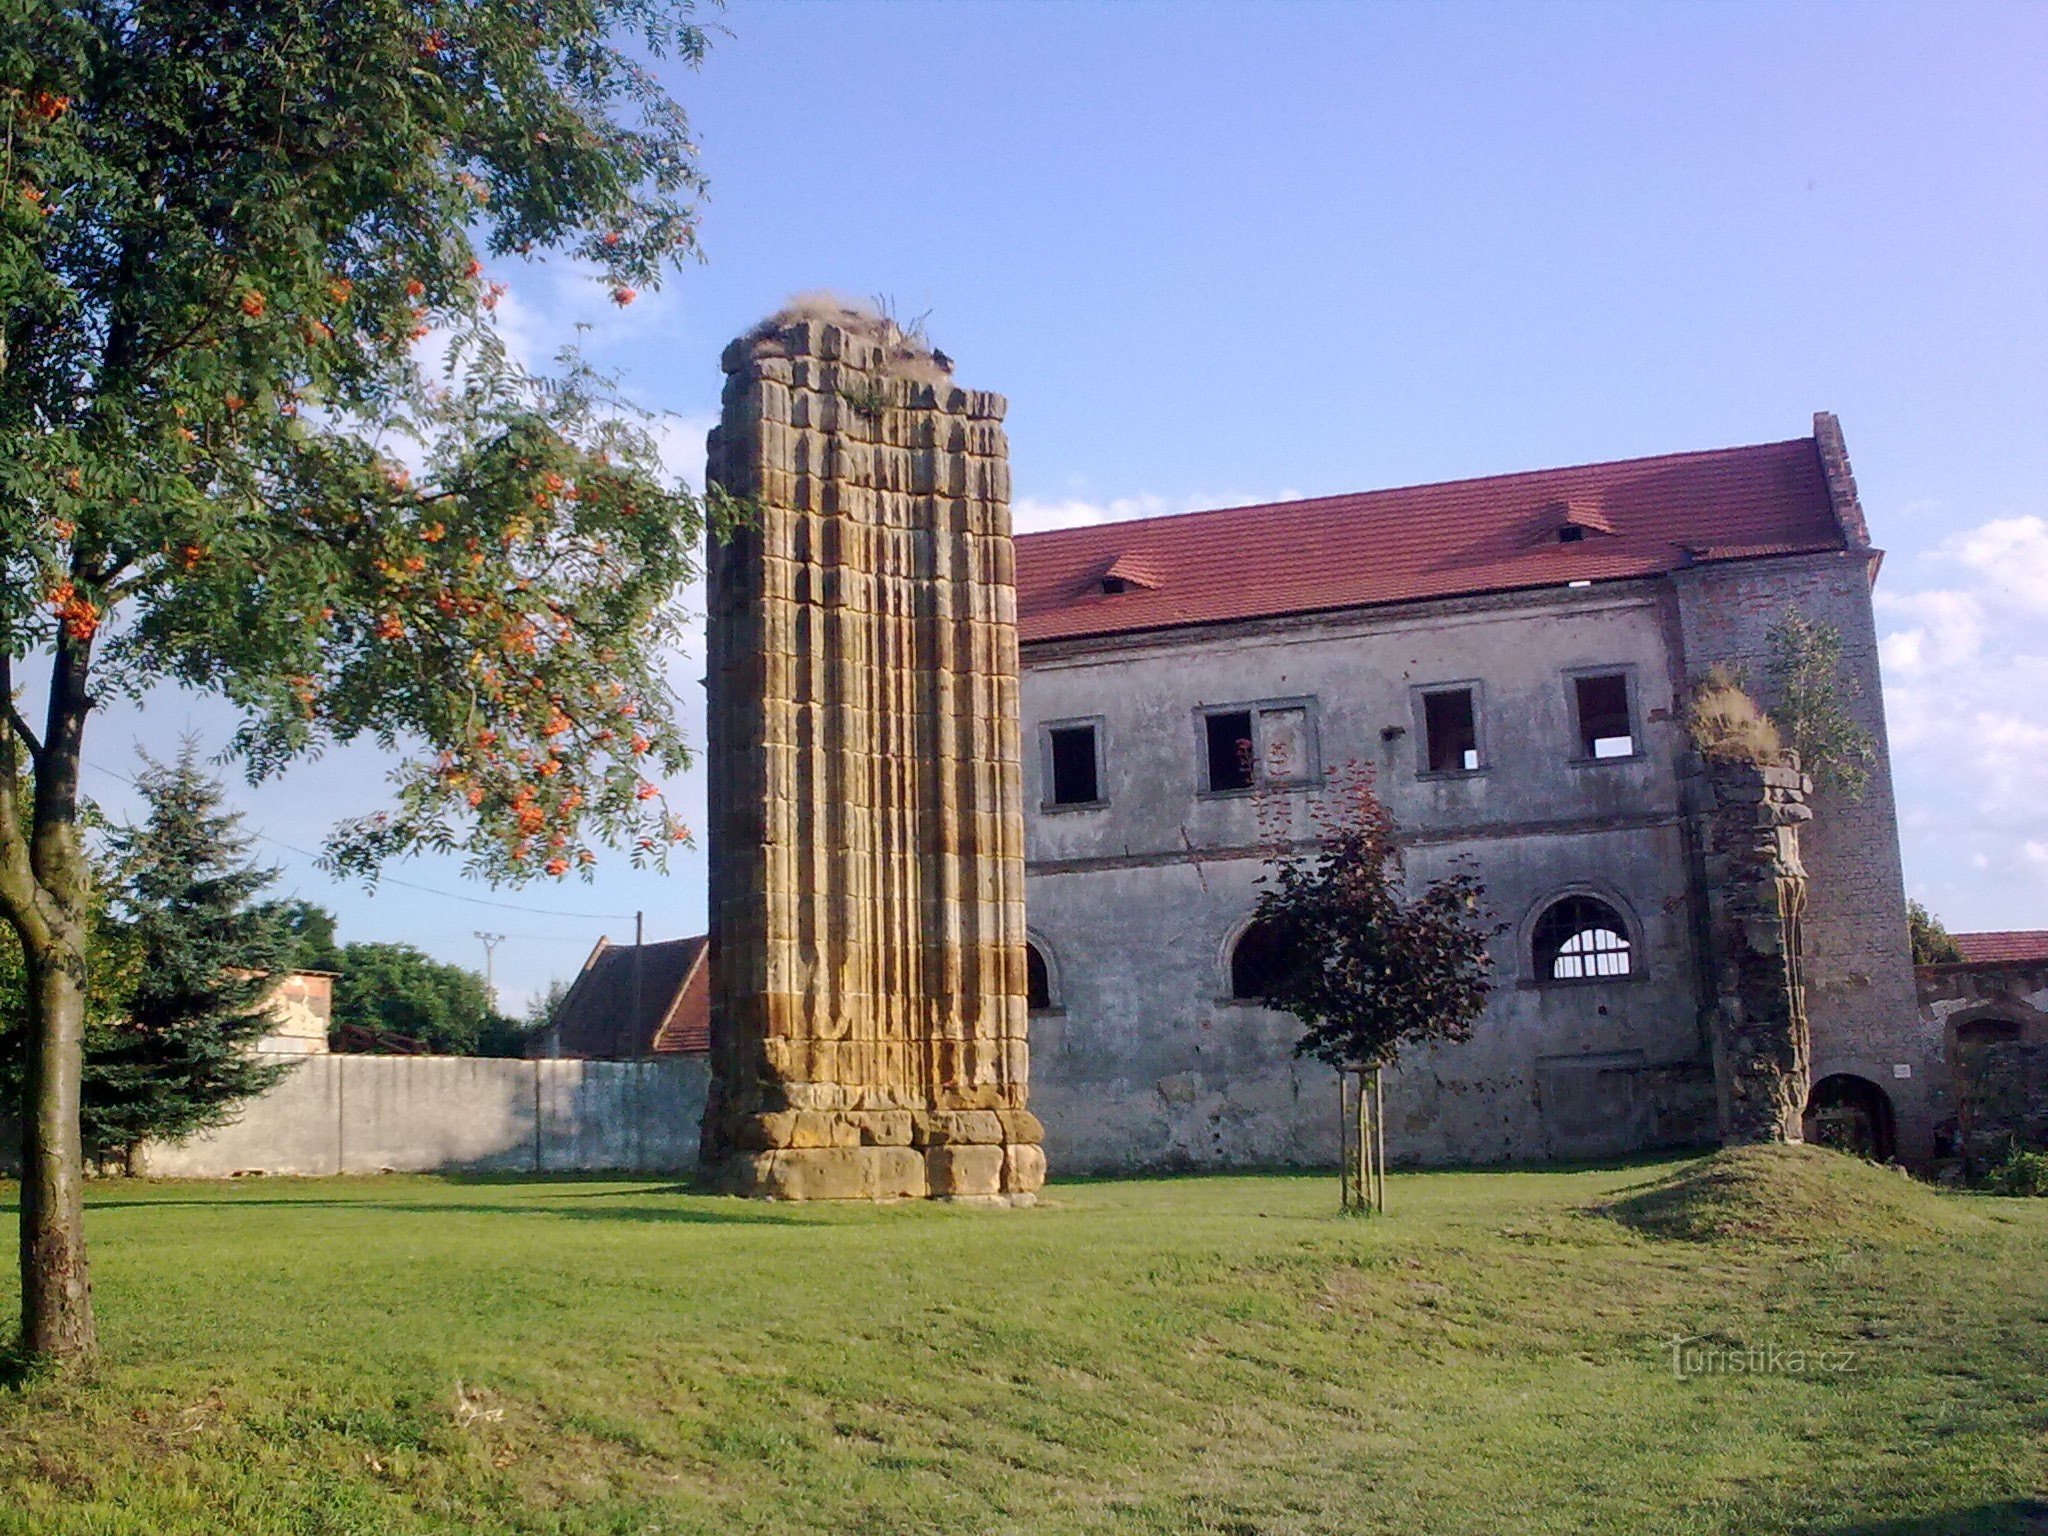 Klášterní Skalice - pillar of the monastery, in the background a courtyard with a castle